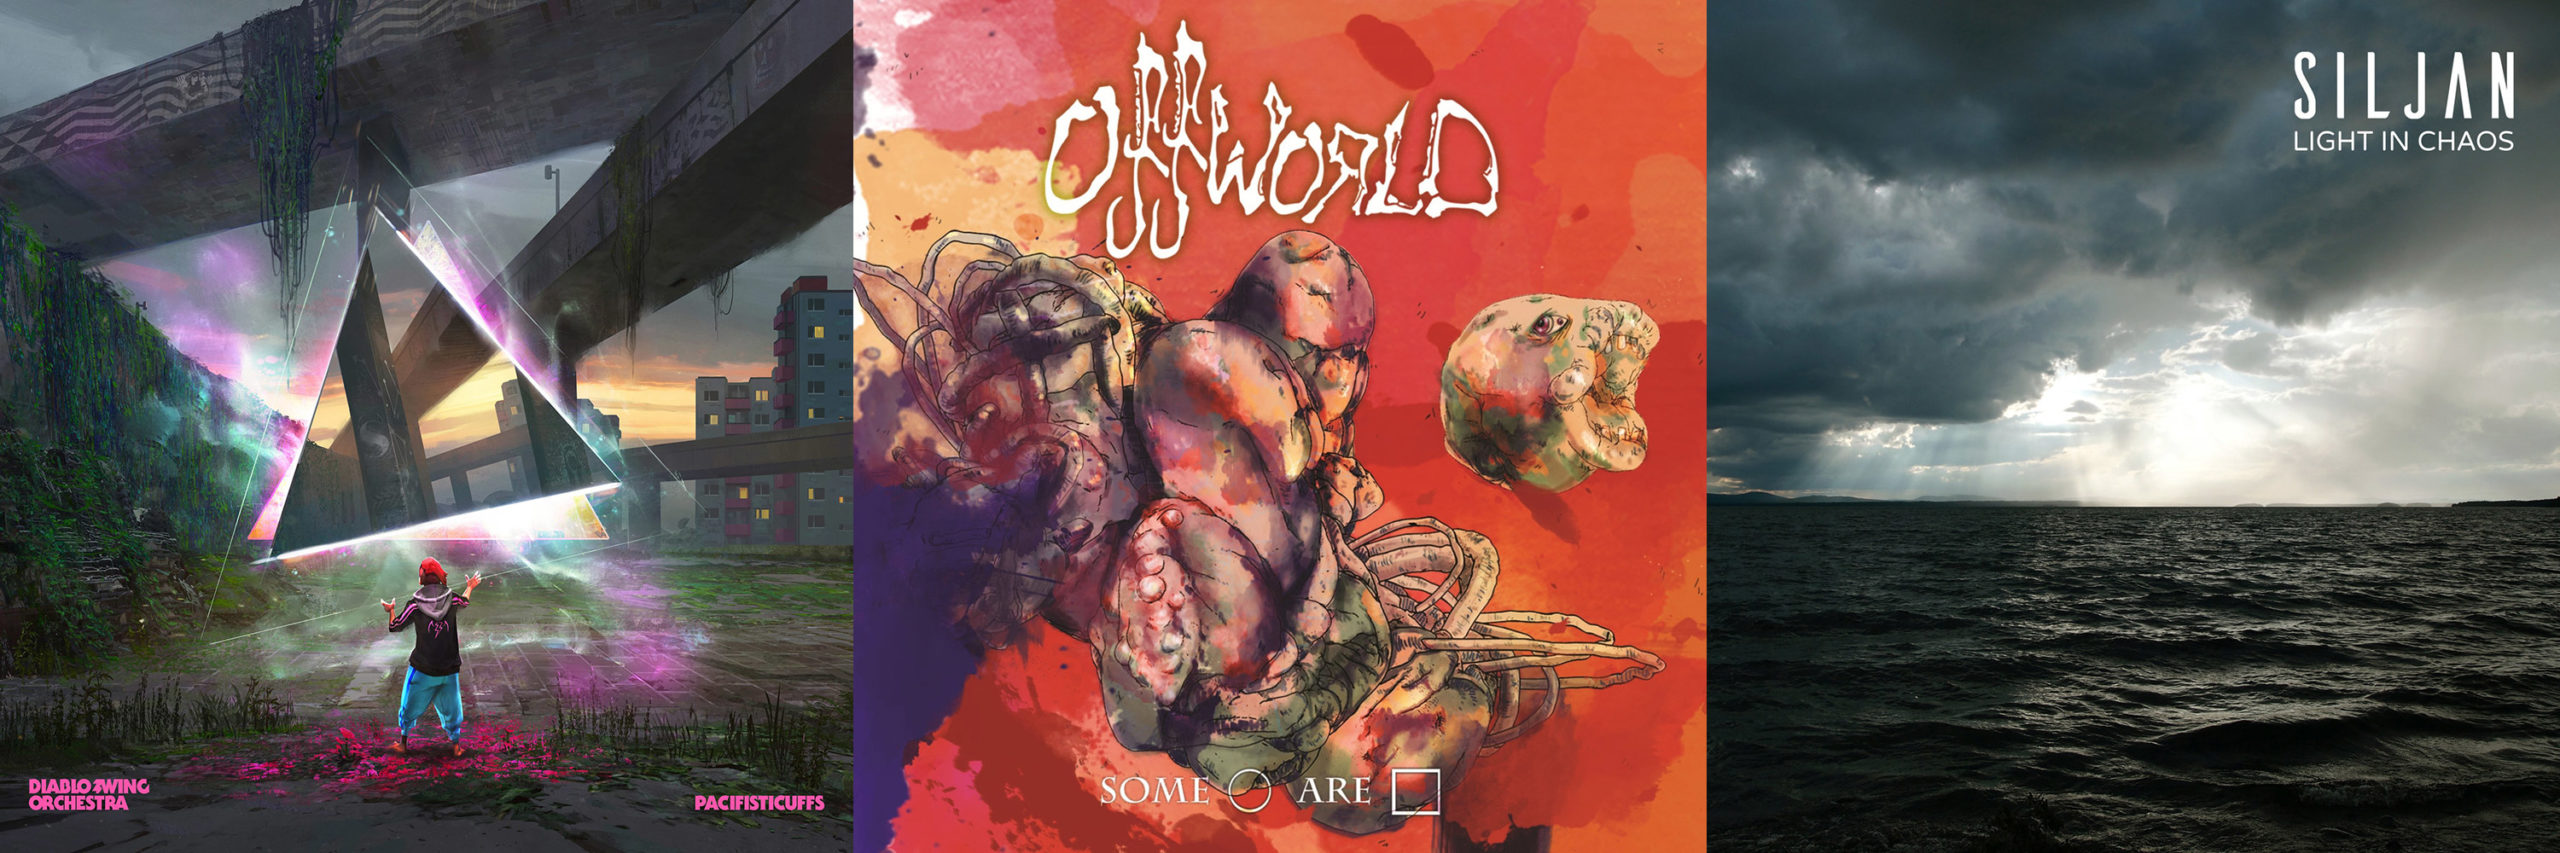 Diablo Swing Orchestra / Offworld / Siljan